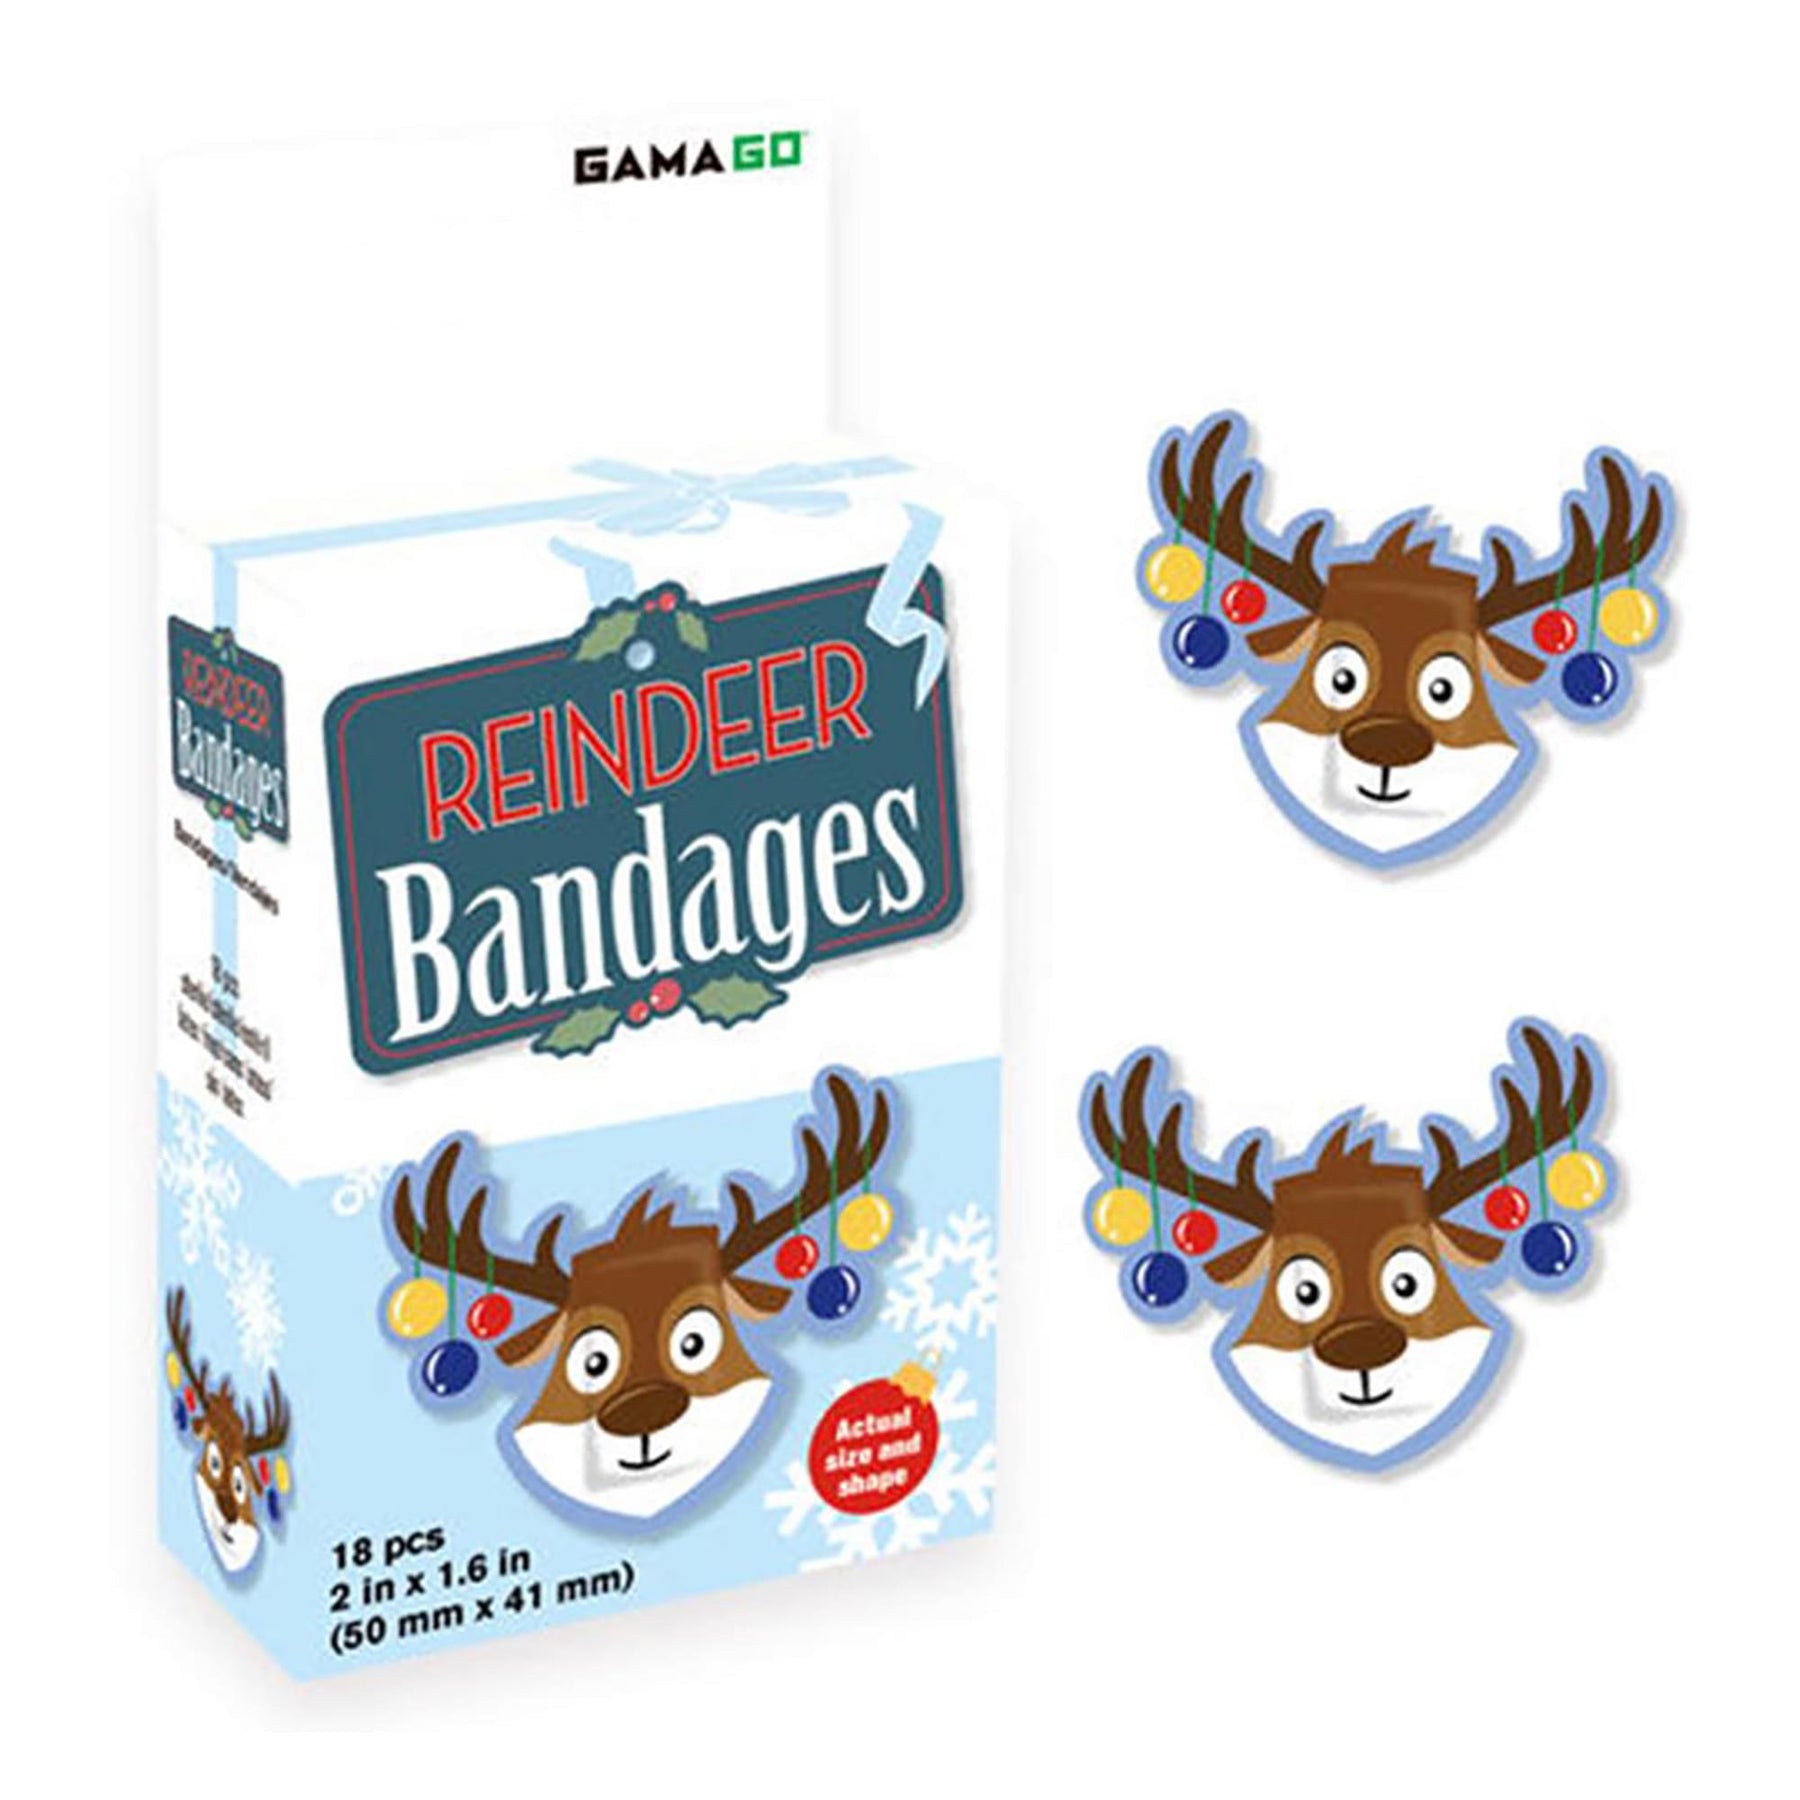 Reindeer Adhesive Bandages | Set of 18